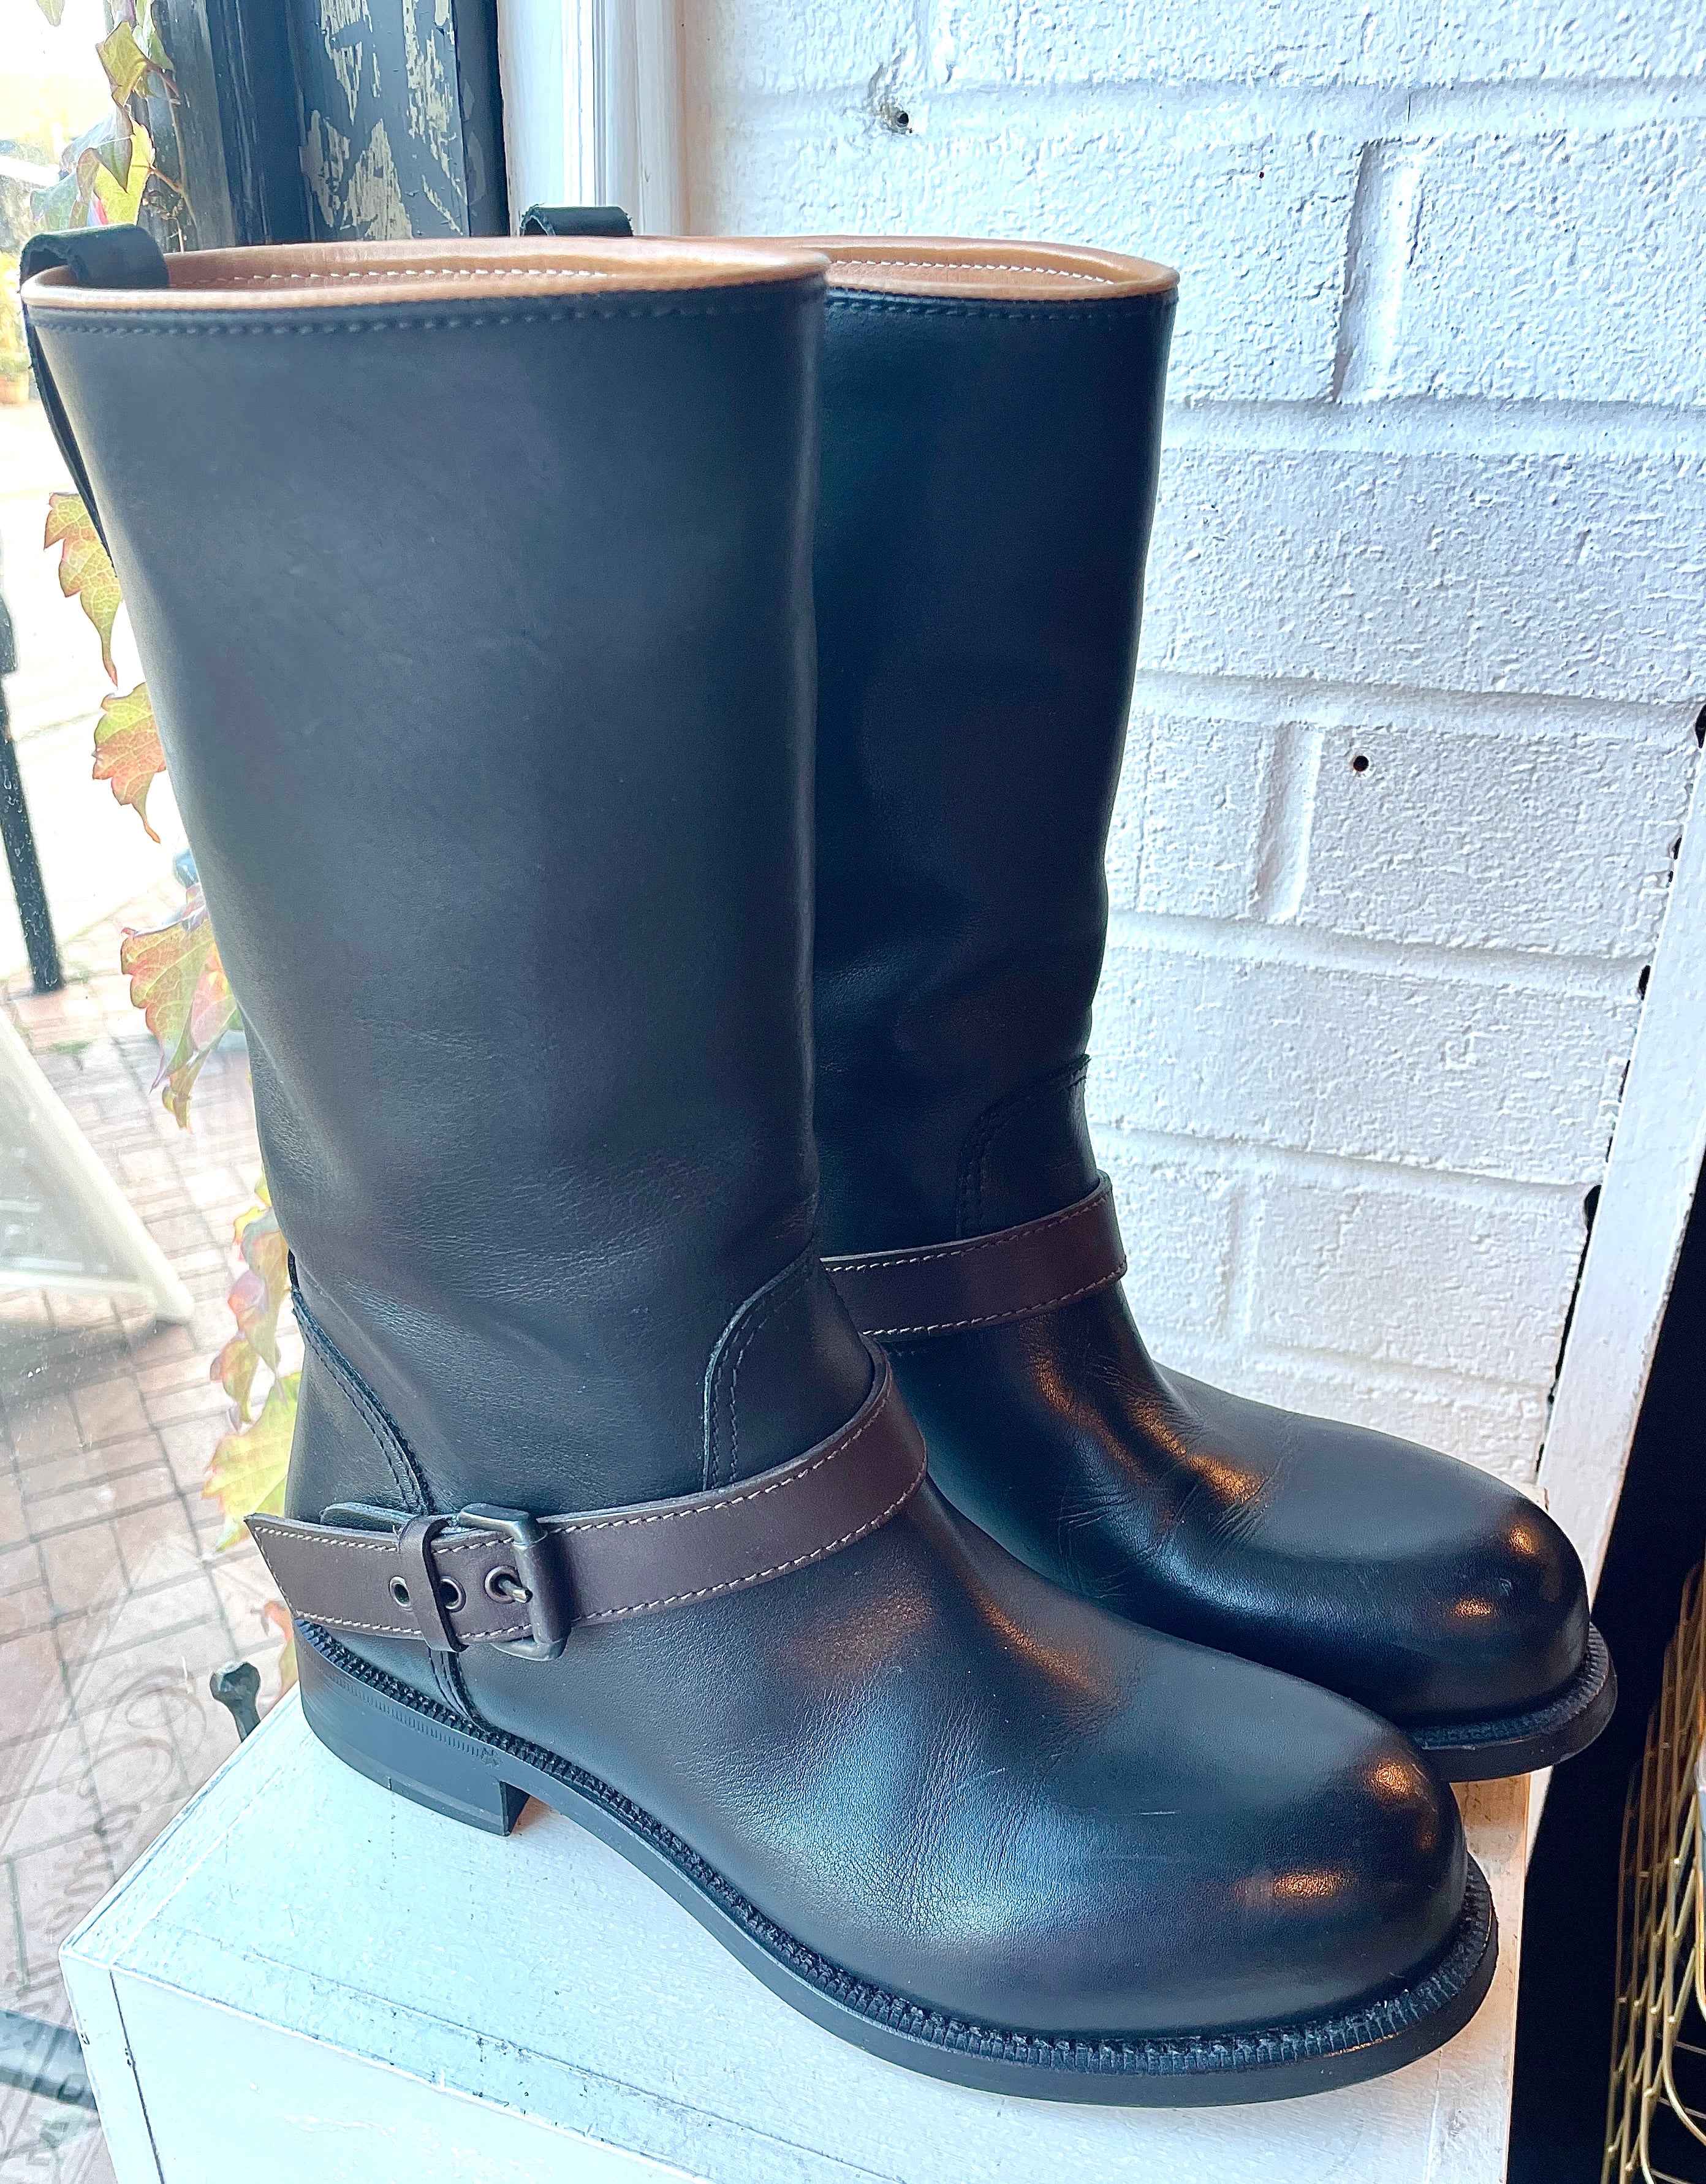 Bottega Veneta Black Leather Boots